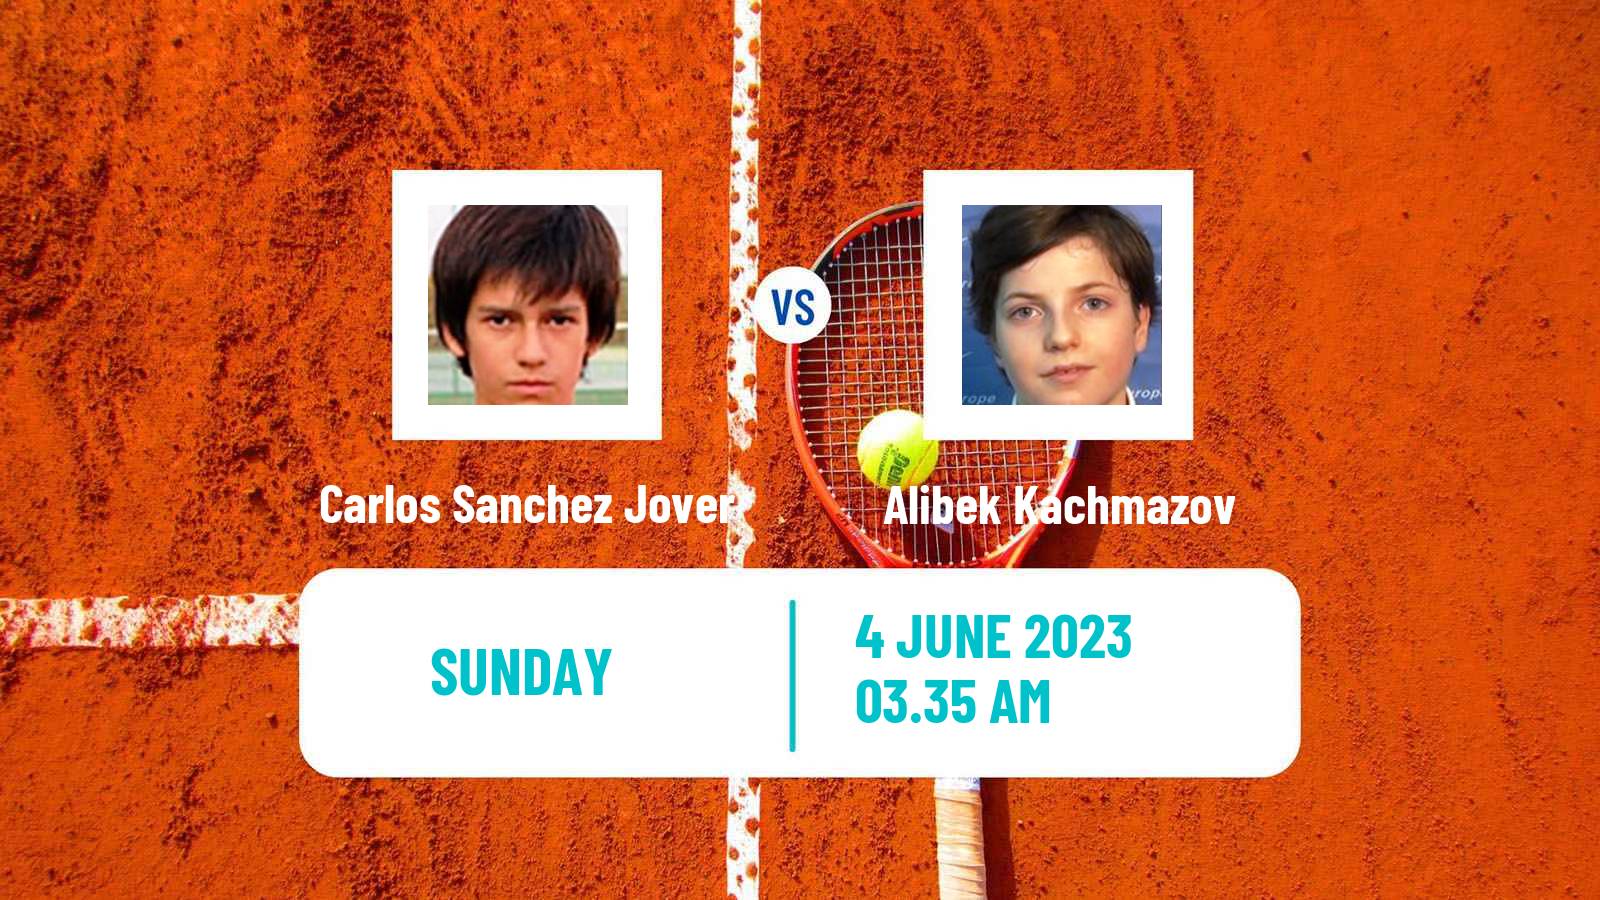 Tennis ITF M25 La Nucia Men Carlos Sanchez Jover - Alibek Kachmazov